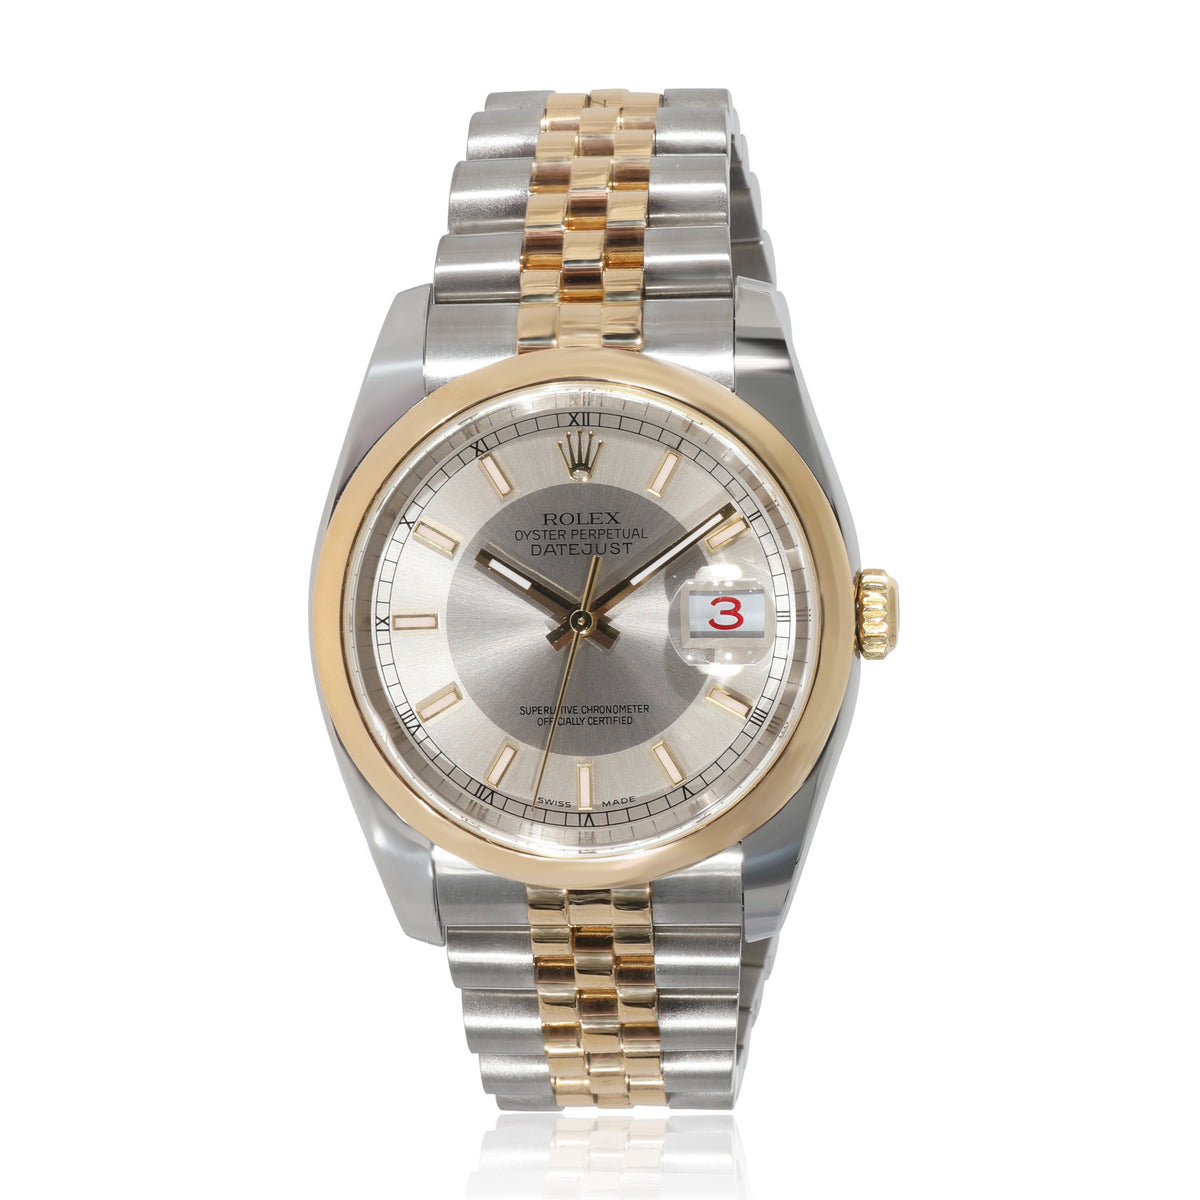 Rolex Datejust 116203 Men's Watch in 18kt Stainless Steel/Yellow Gold